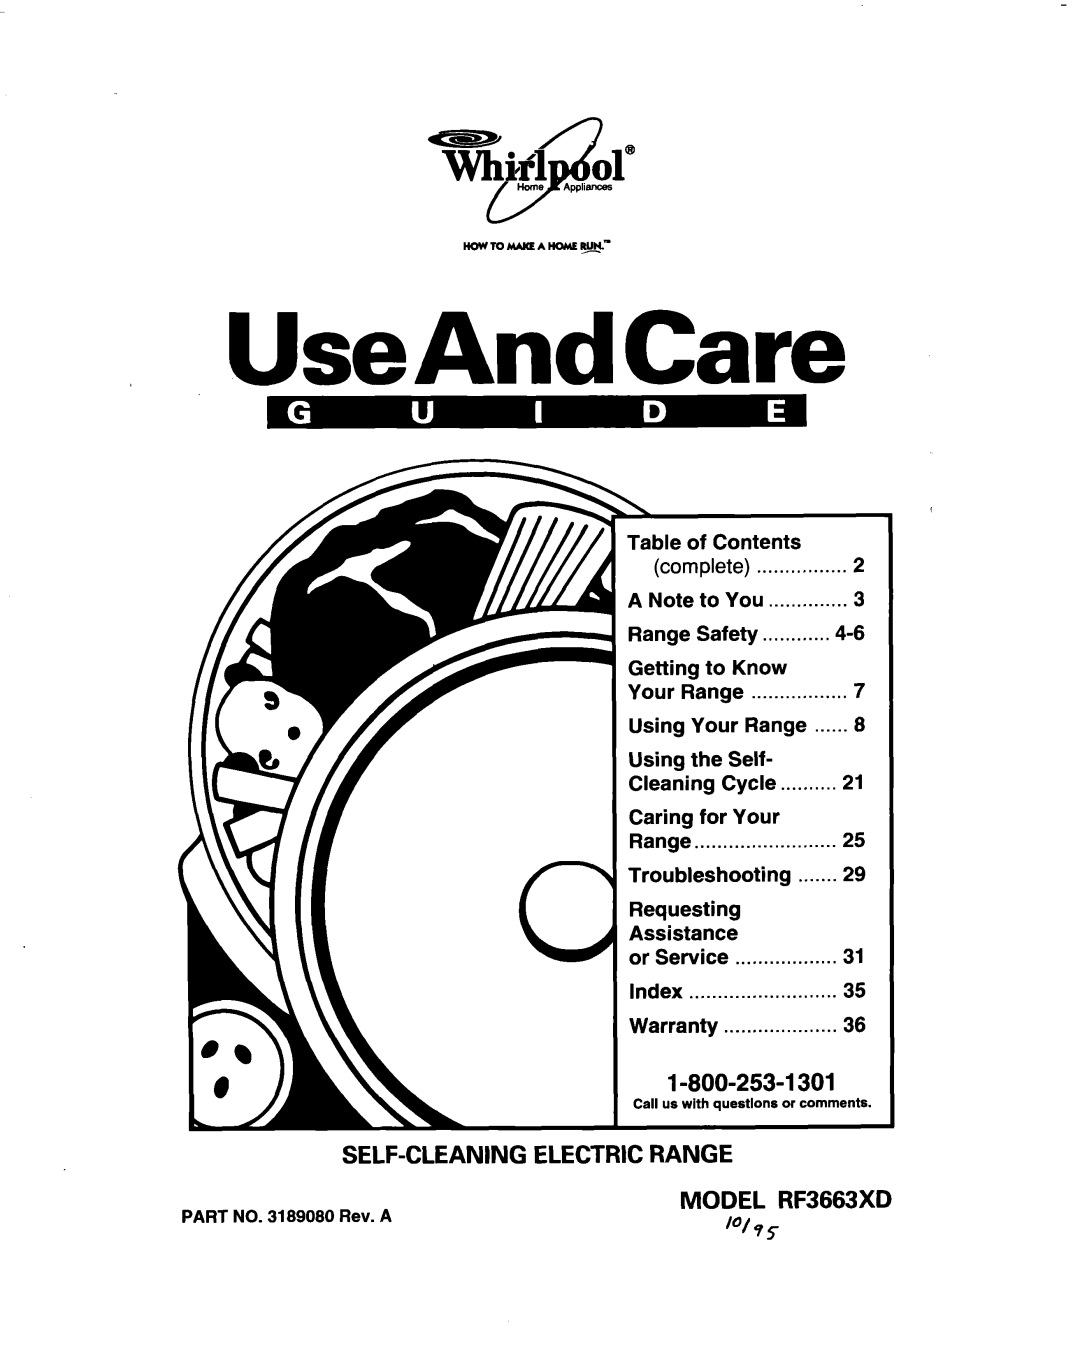 Whirlpool manual UseAndCare, VLfl ol@, Self-Cleaning, l-800-253-1301, Electric Range, MODEL RF3663XD ioh5 